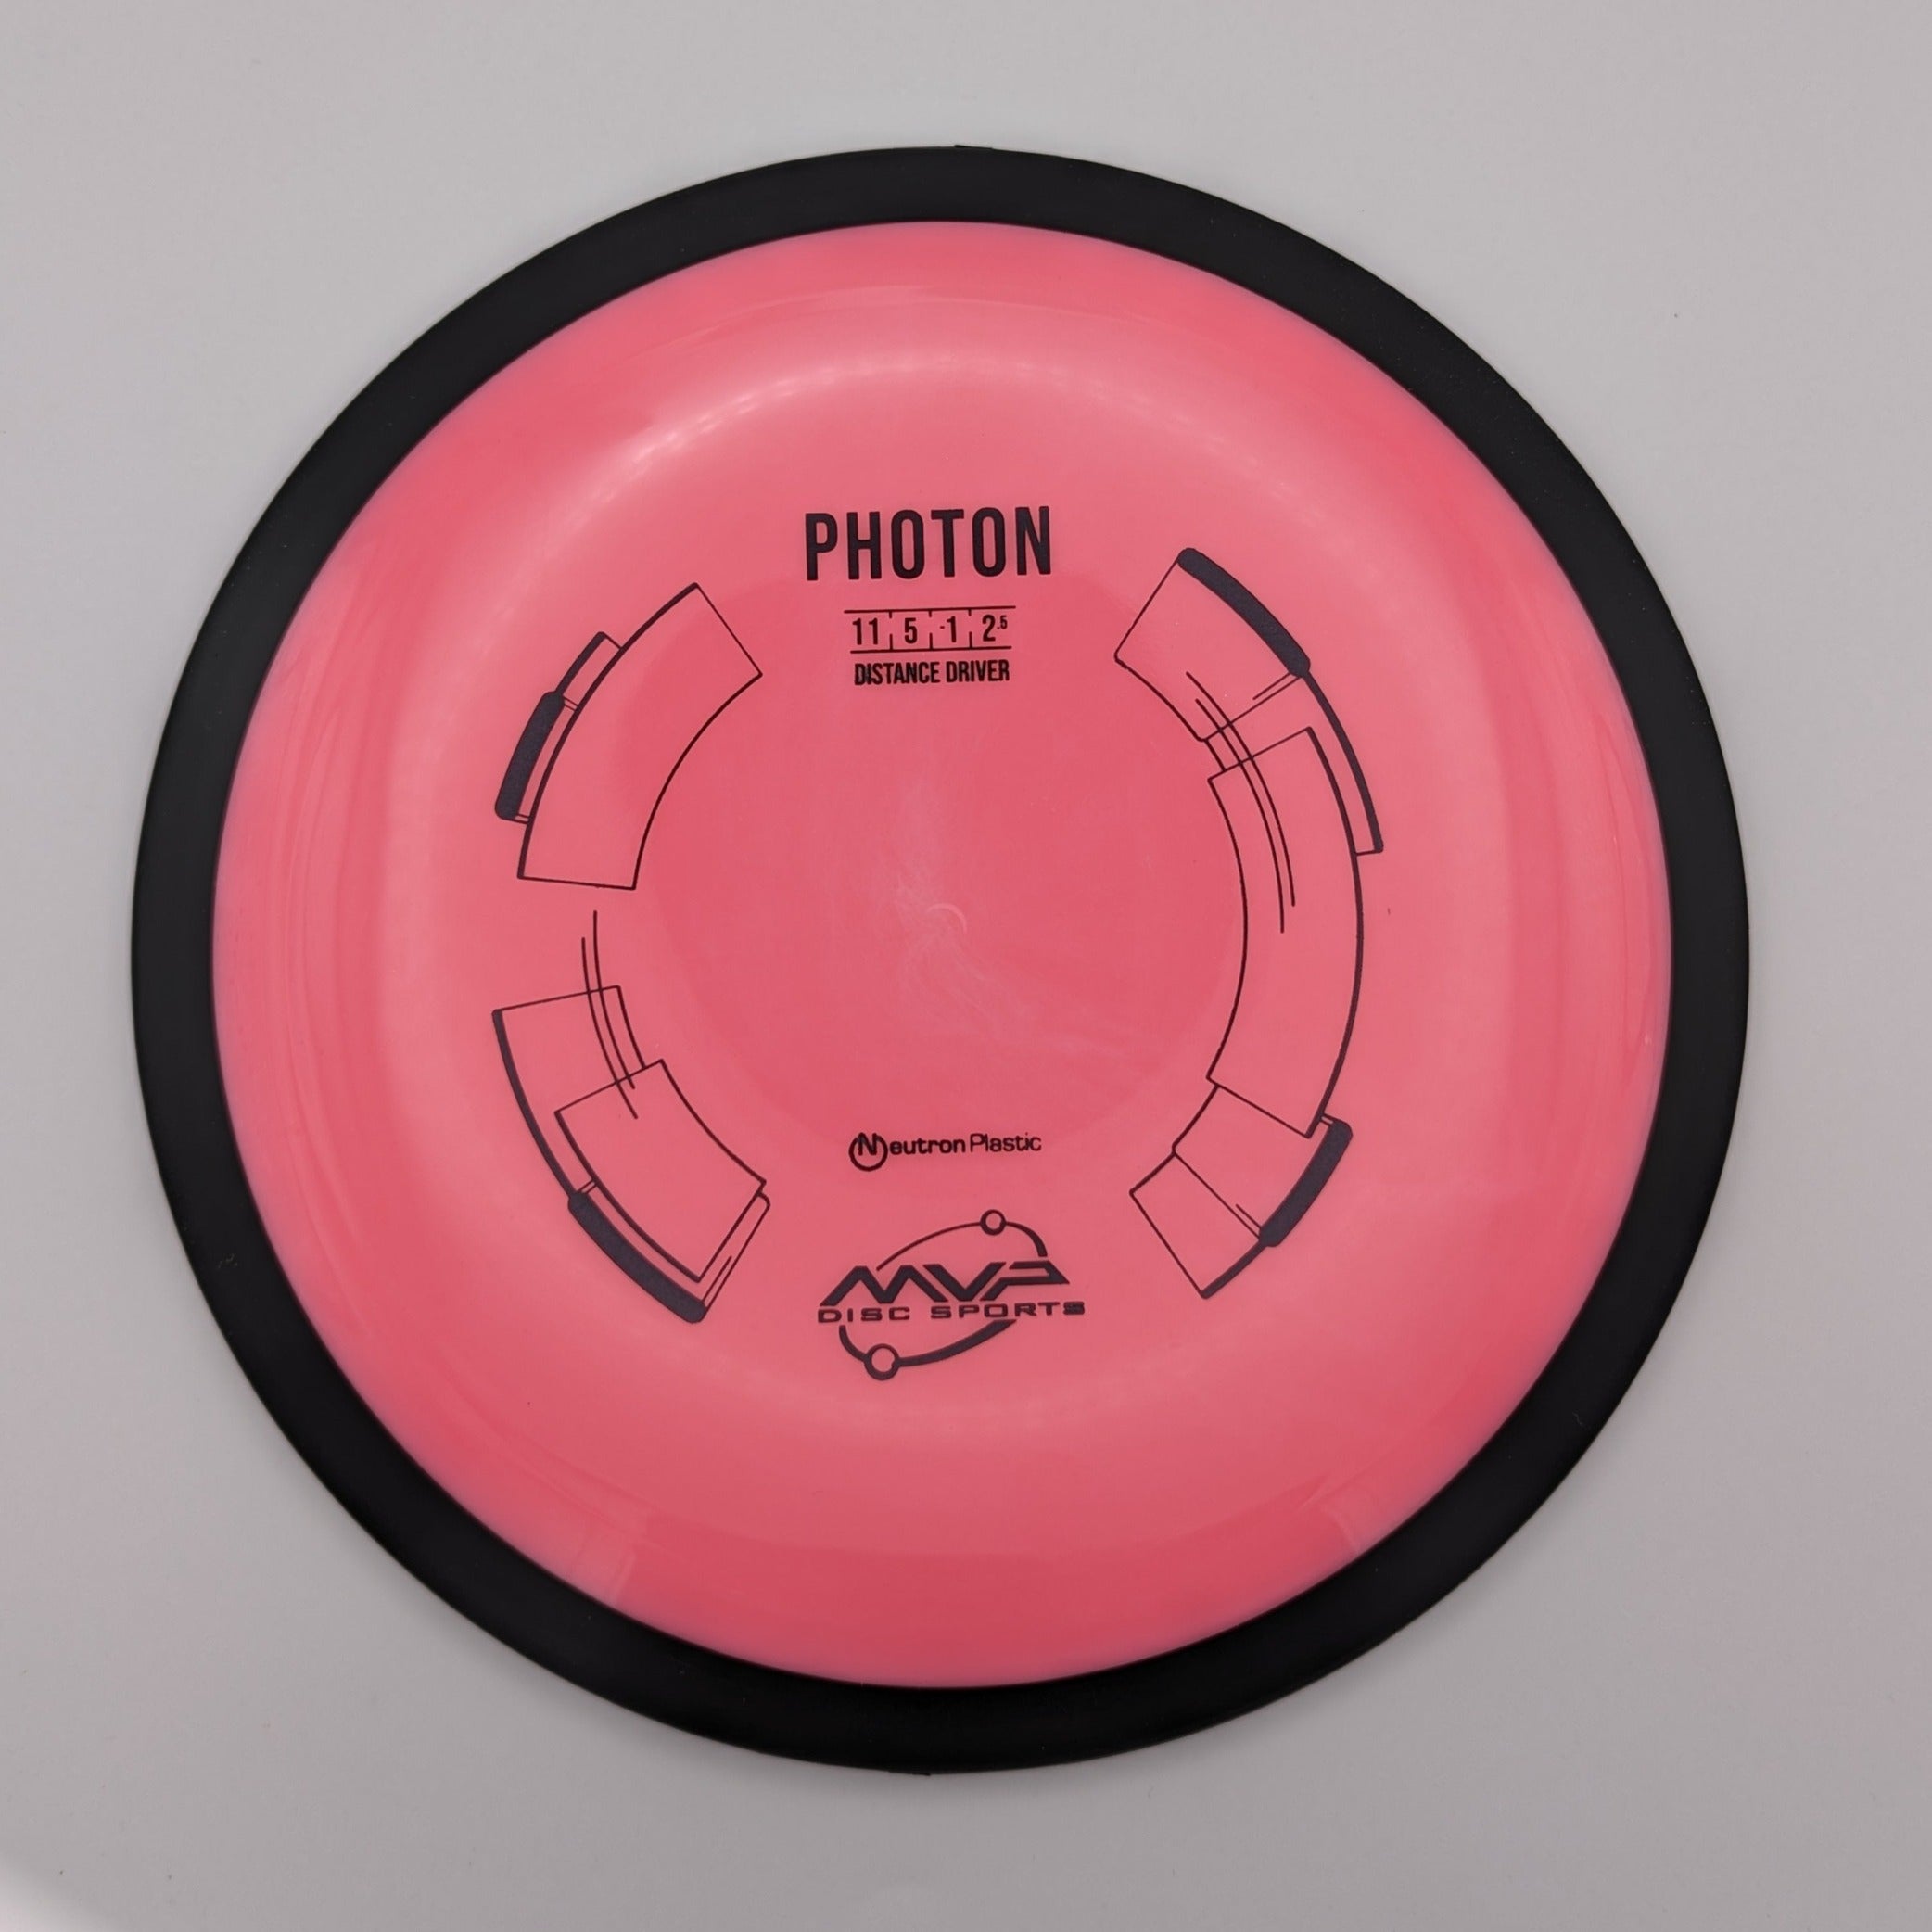 MVP Photon Distance Driver Neutron Plastic